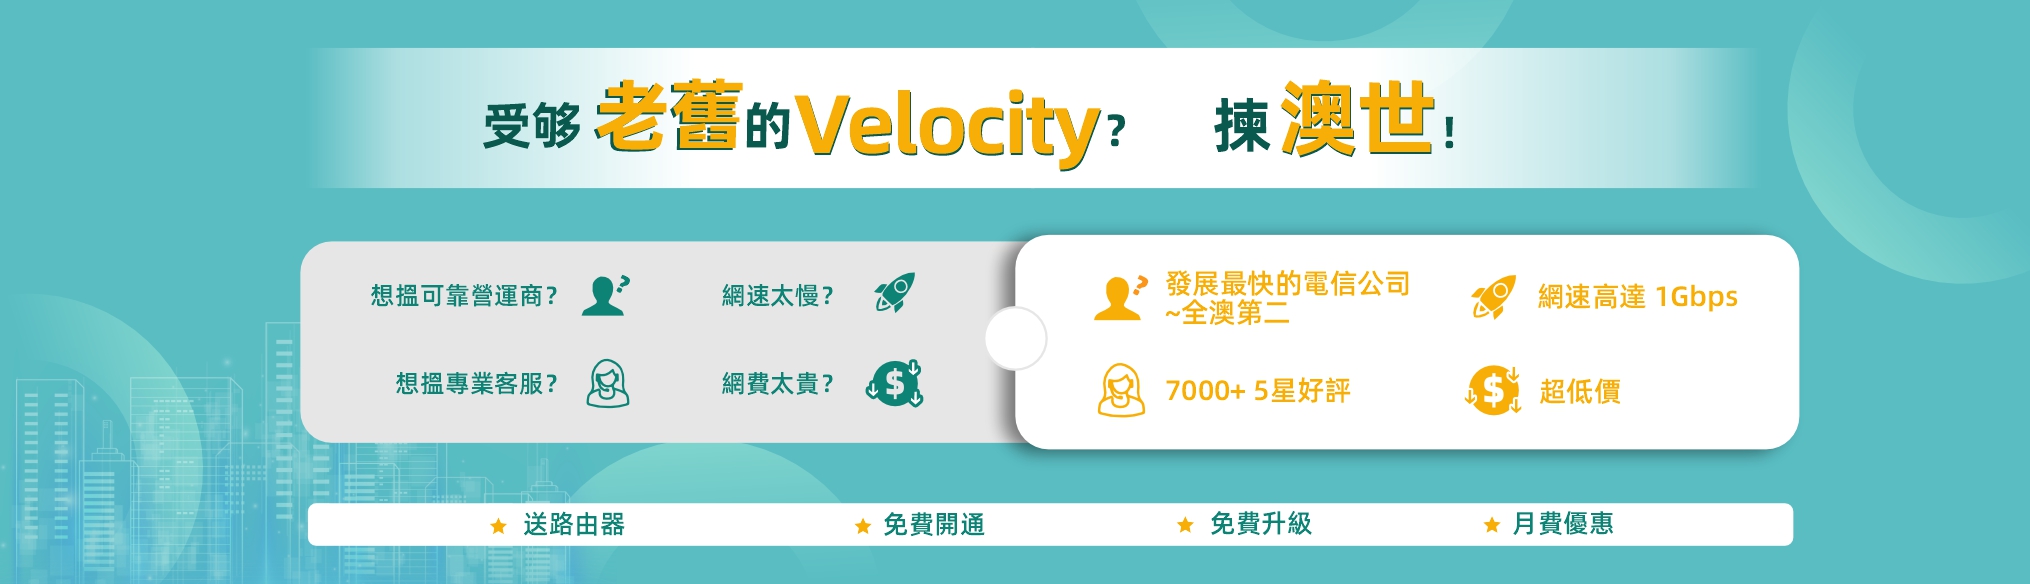 Telstra Velocity 光纖服務 澳世網絡